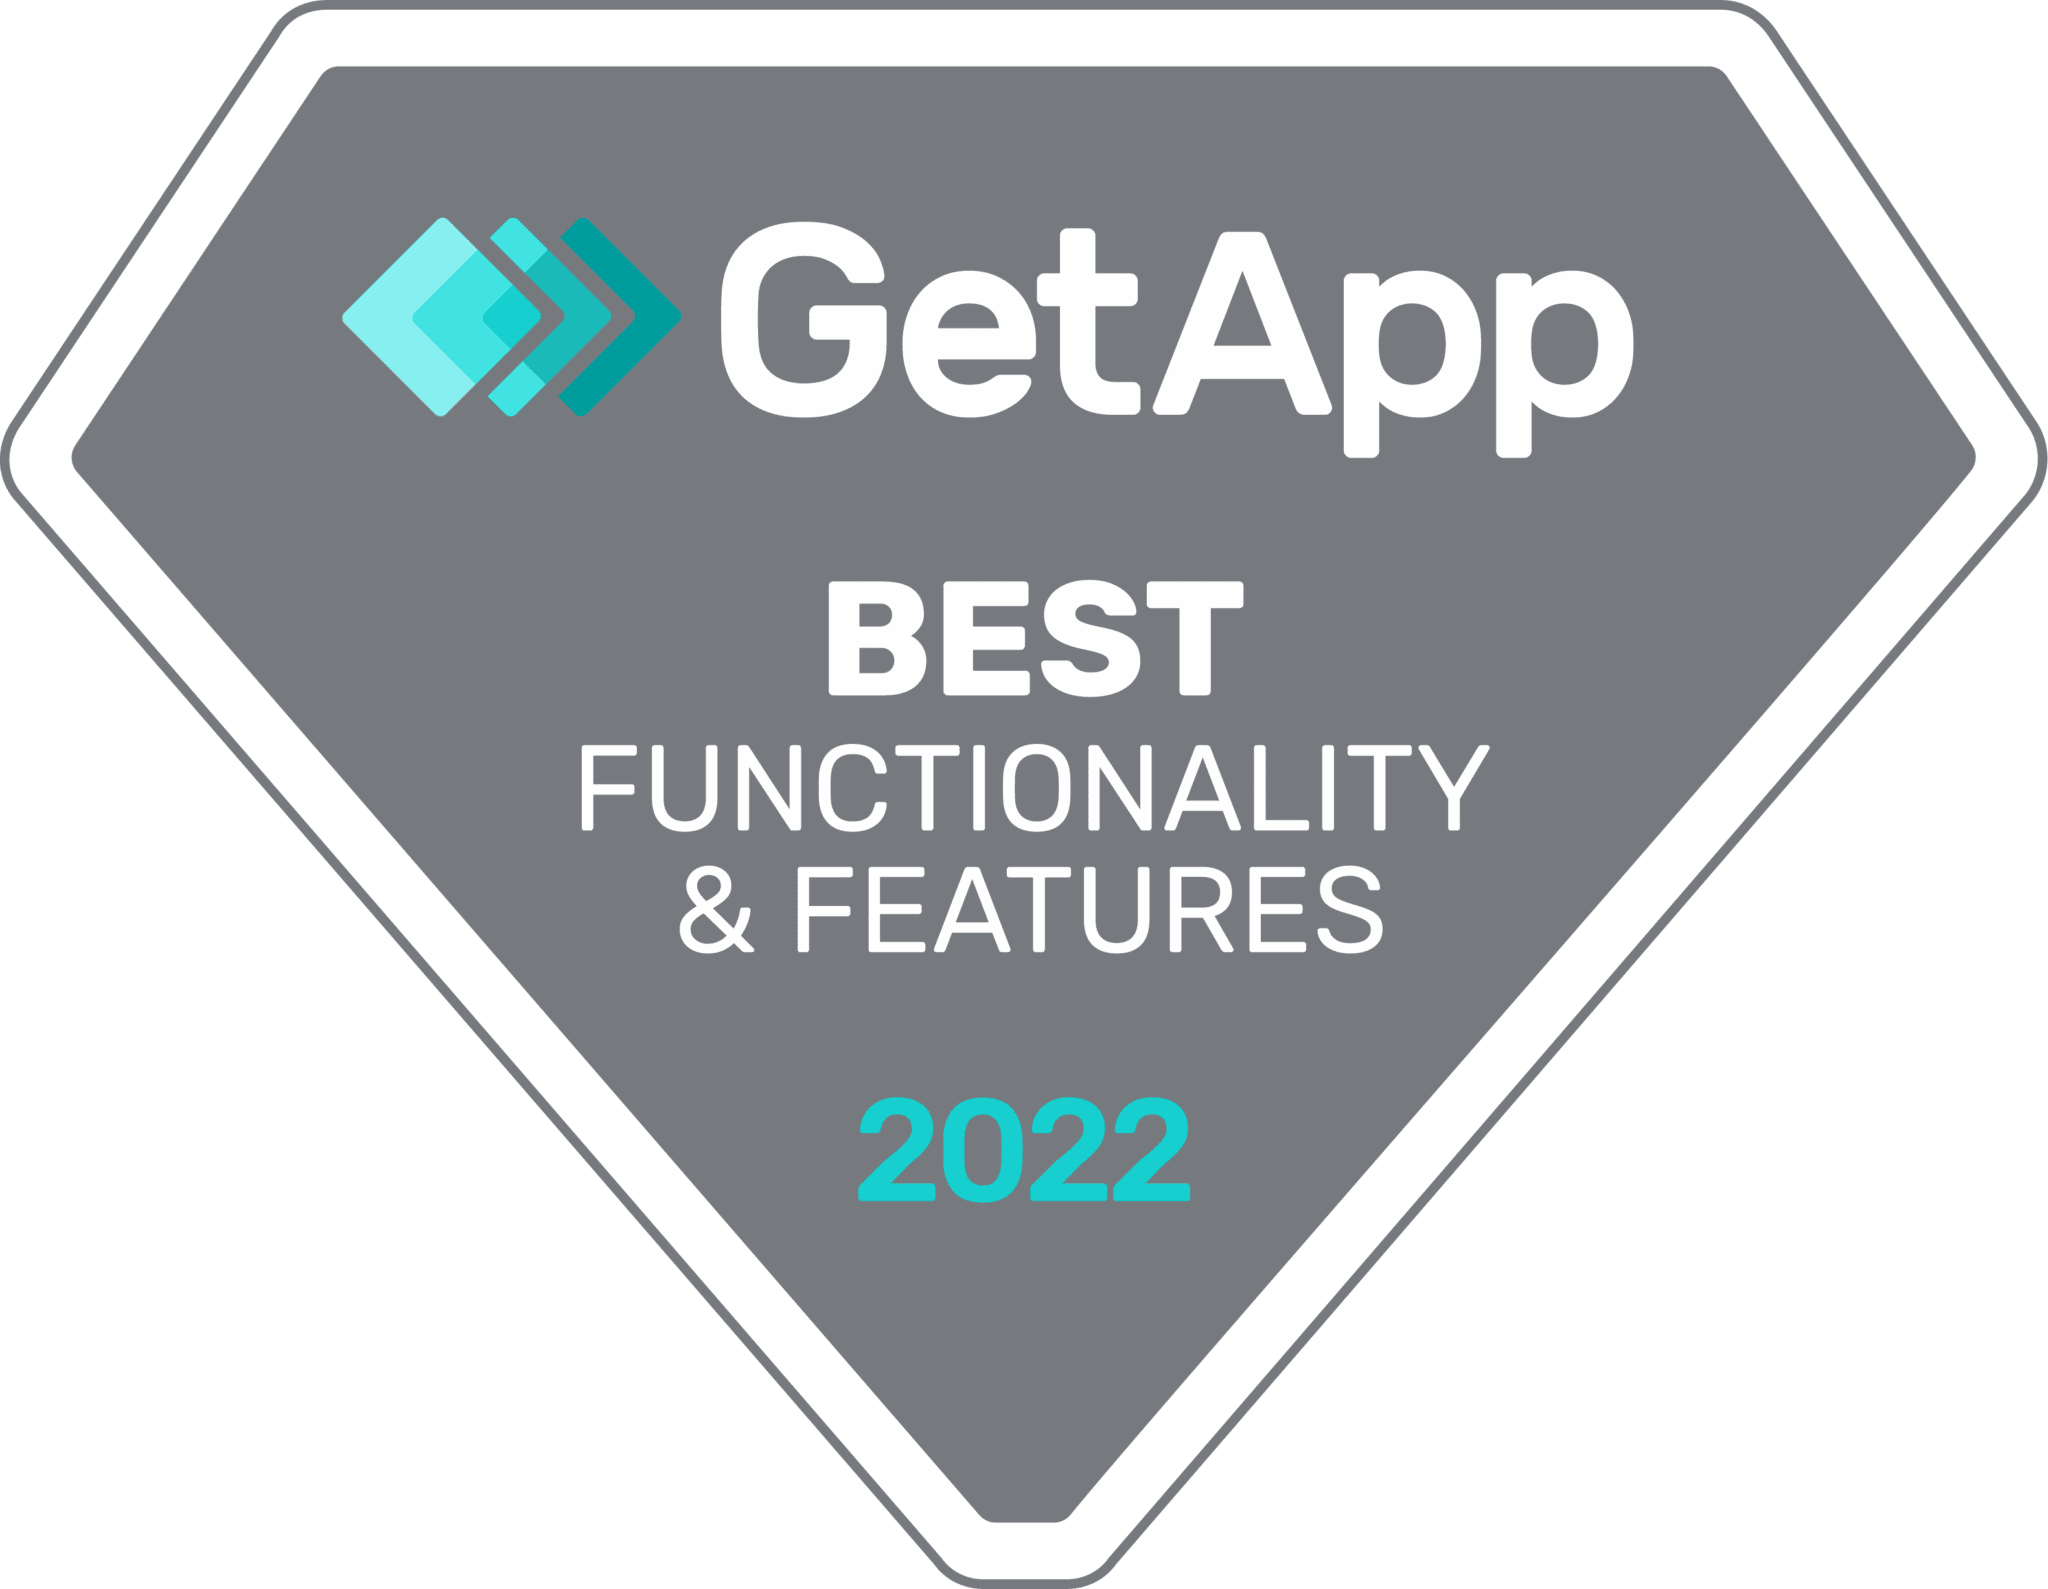 GetApp best functionality & features 2022